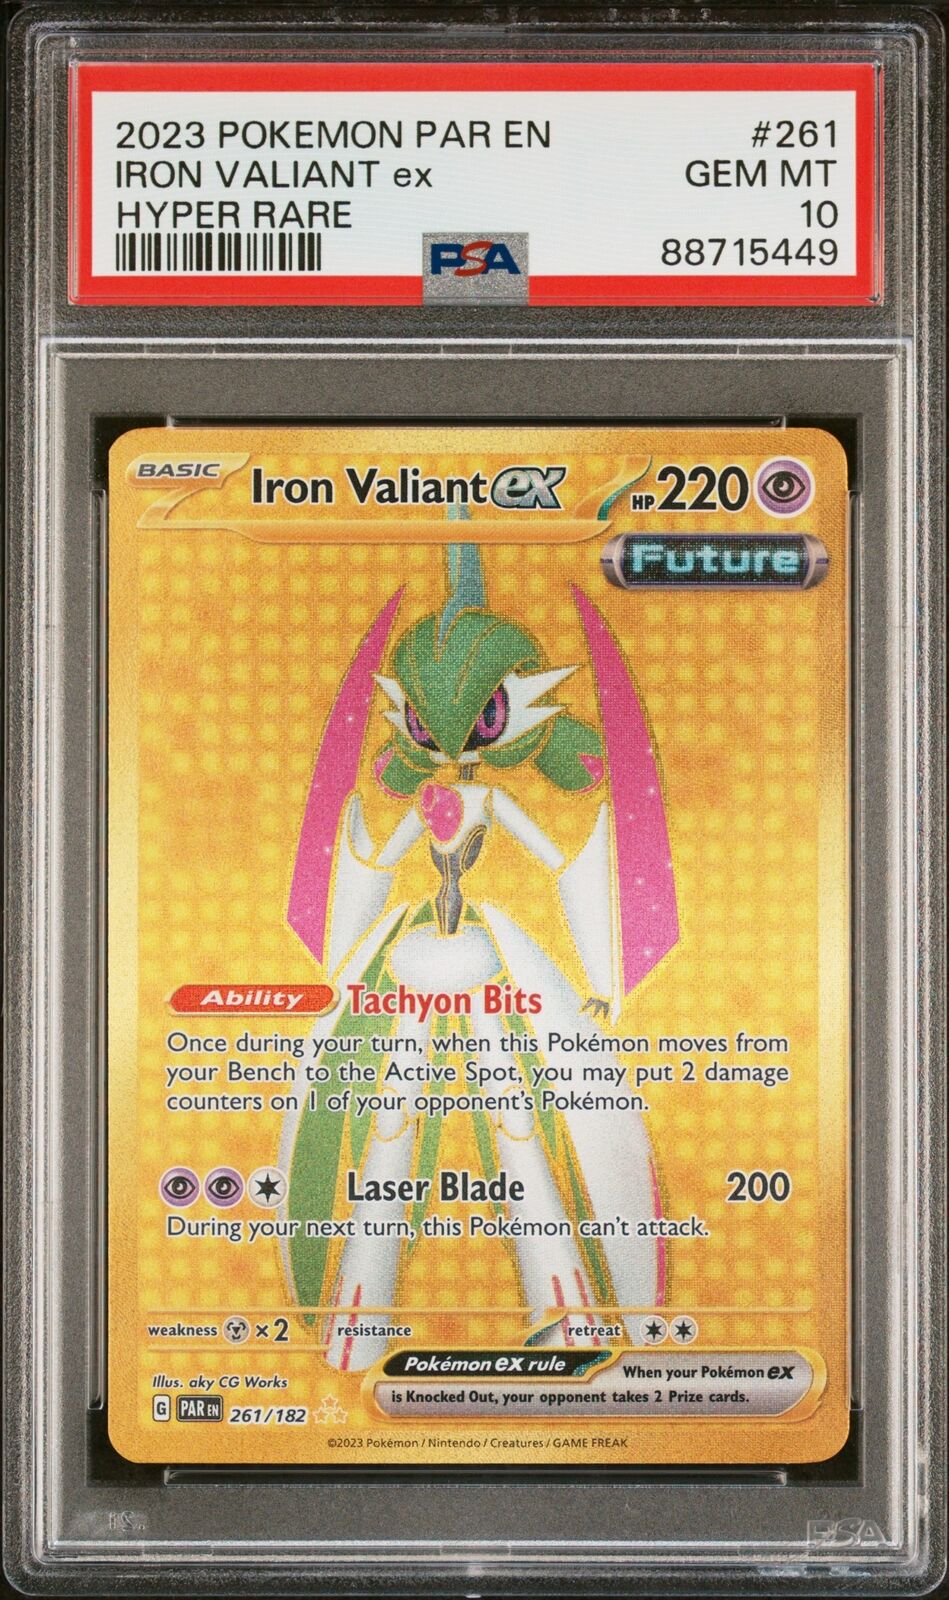 PSA 10 GEM MINT Iron Valiant ex 261/182 Paradox Rift Hyper Rare Pokemon Card